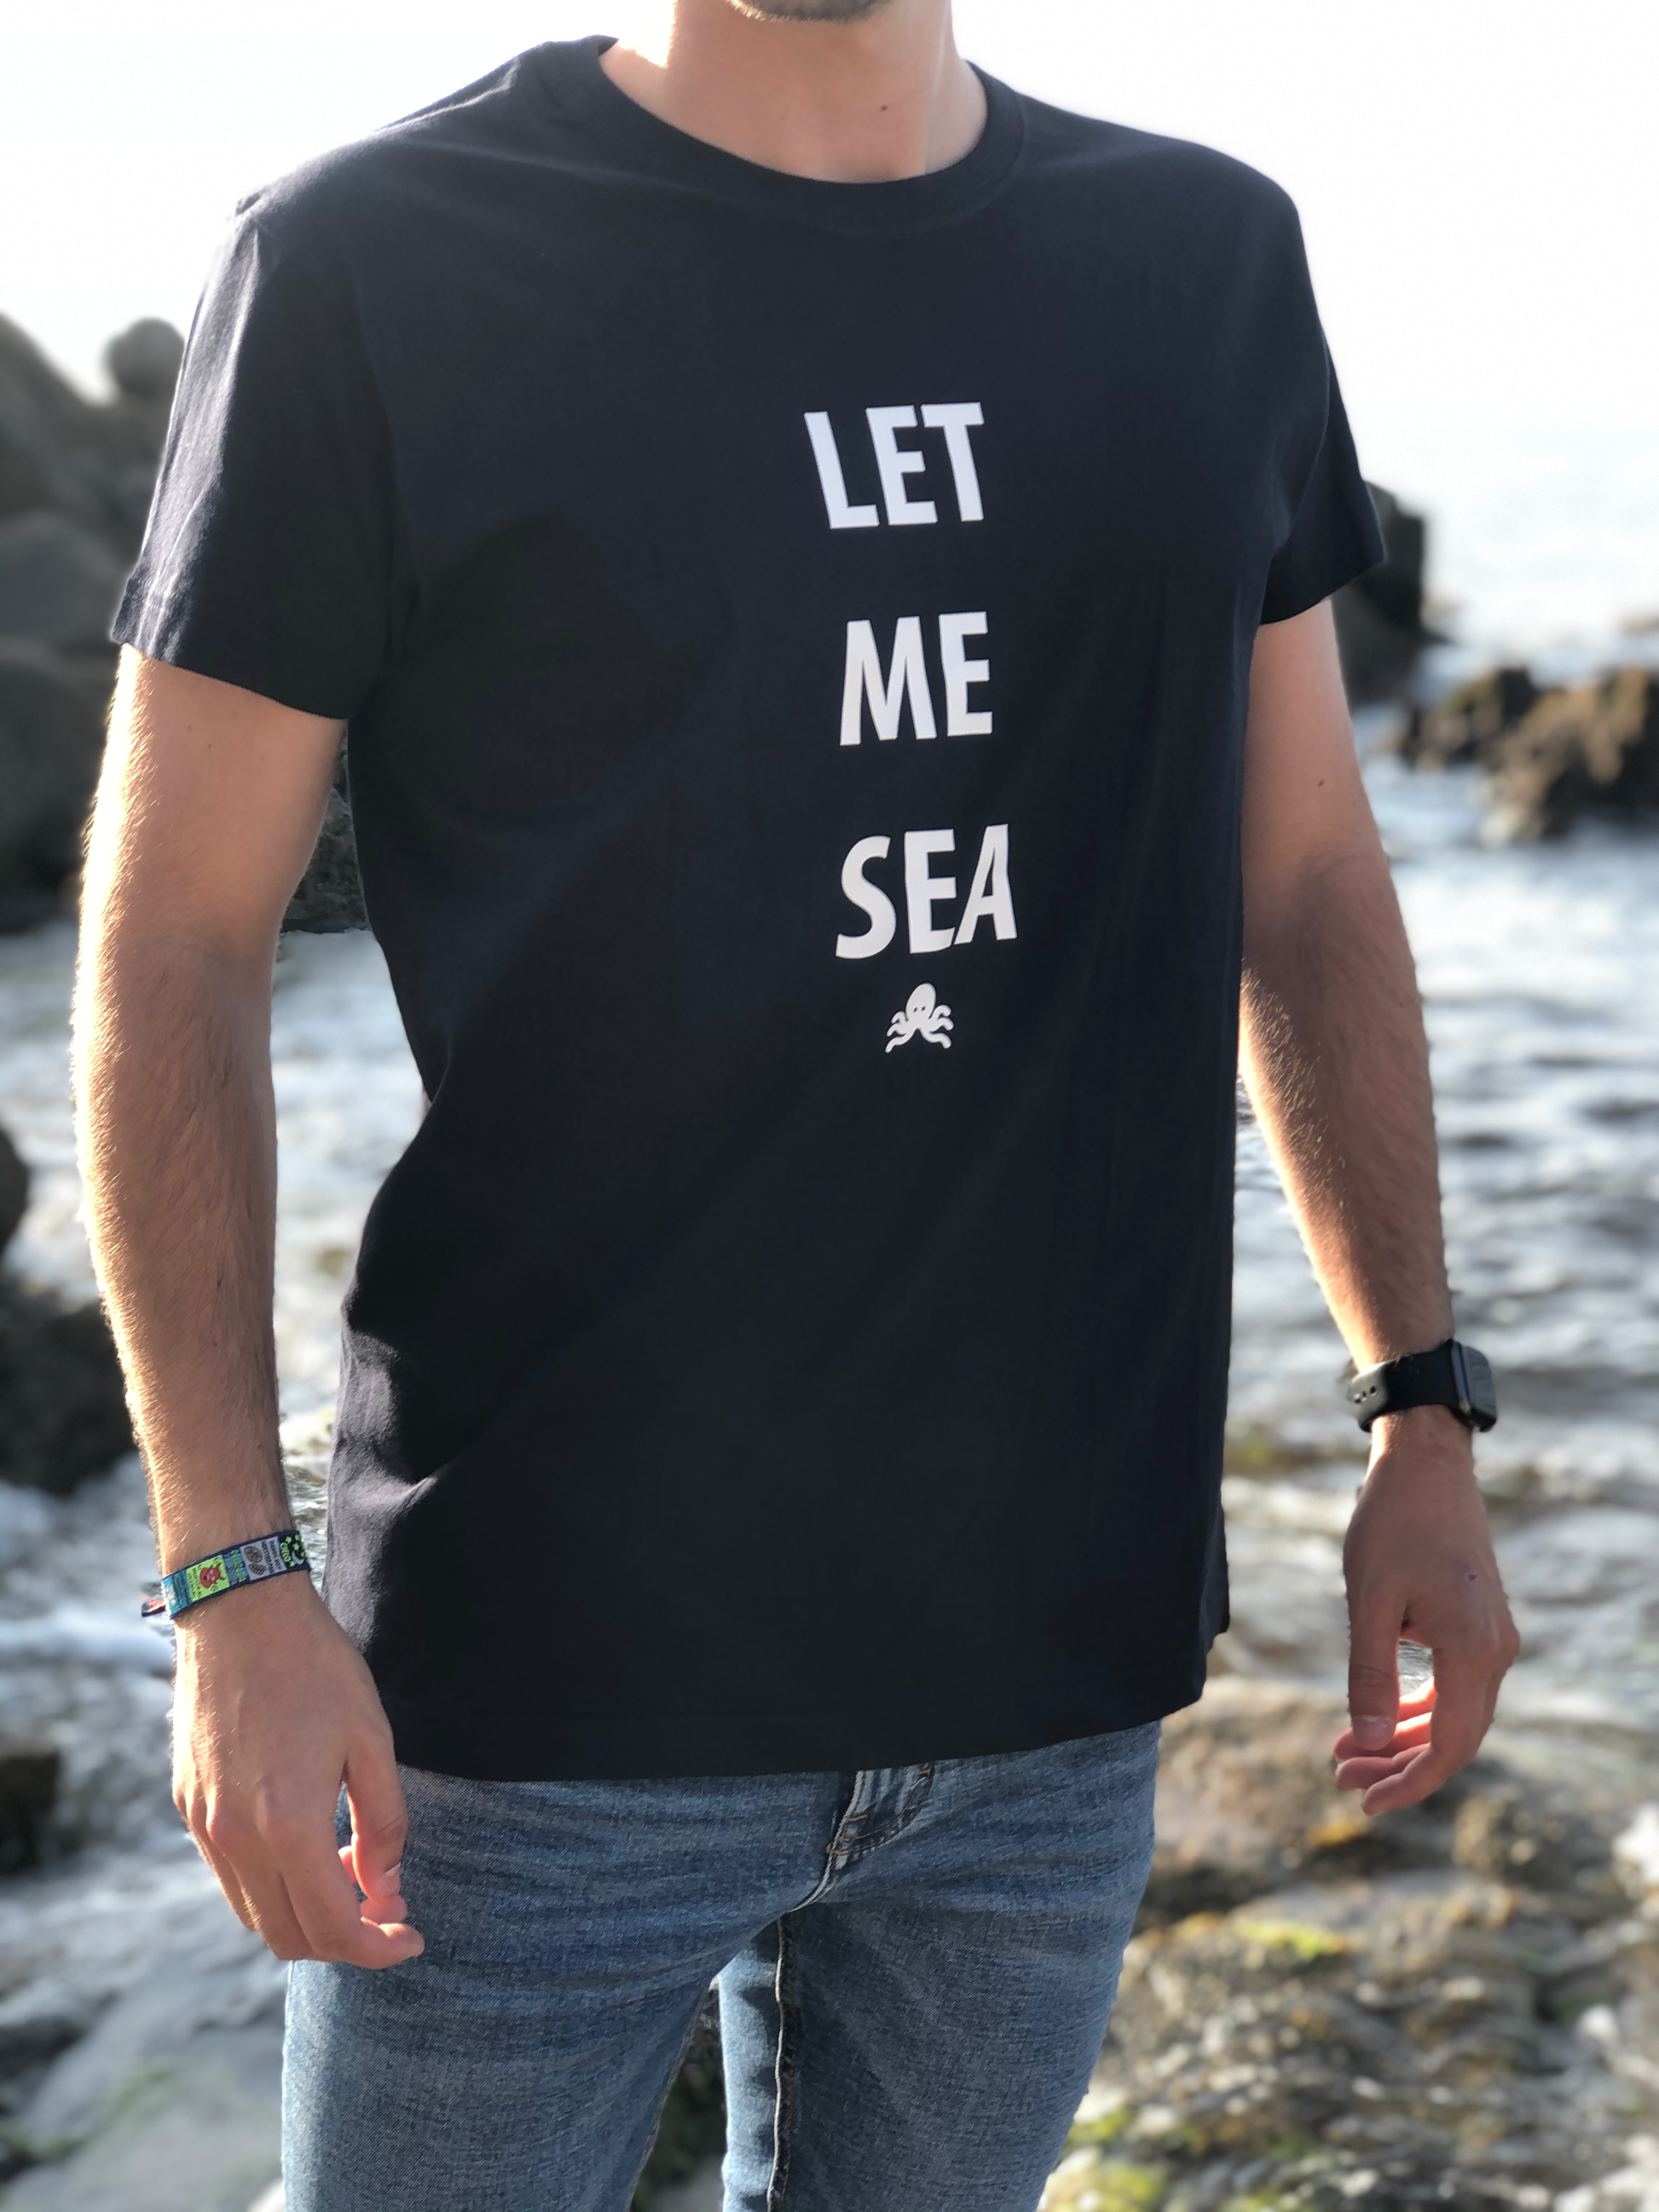 Camisetas logo pulpo SNOC - CAMISETA LET ME SEA  